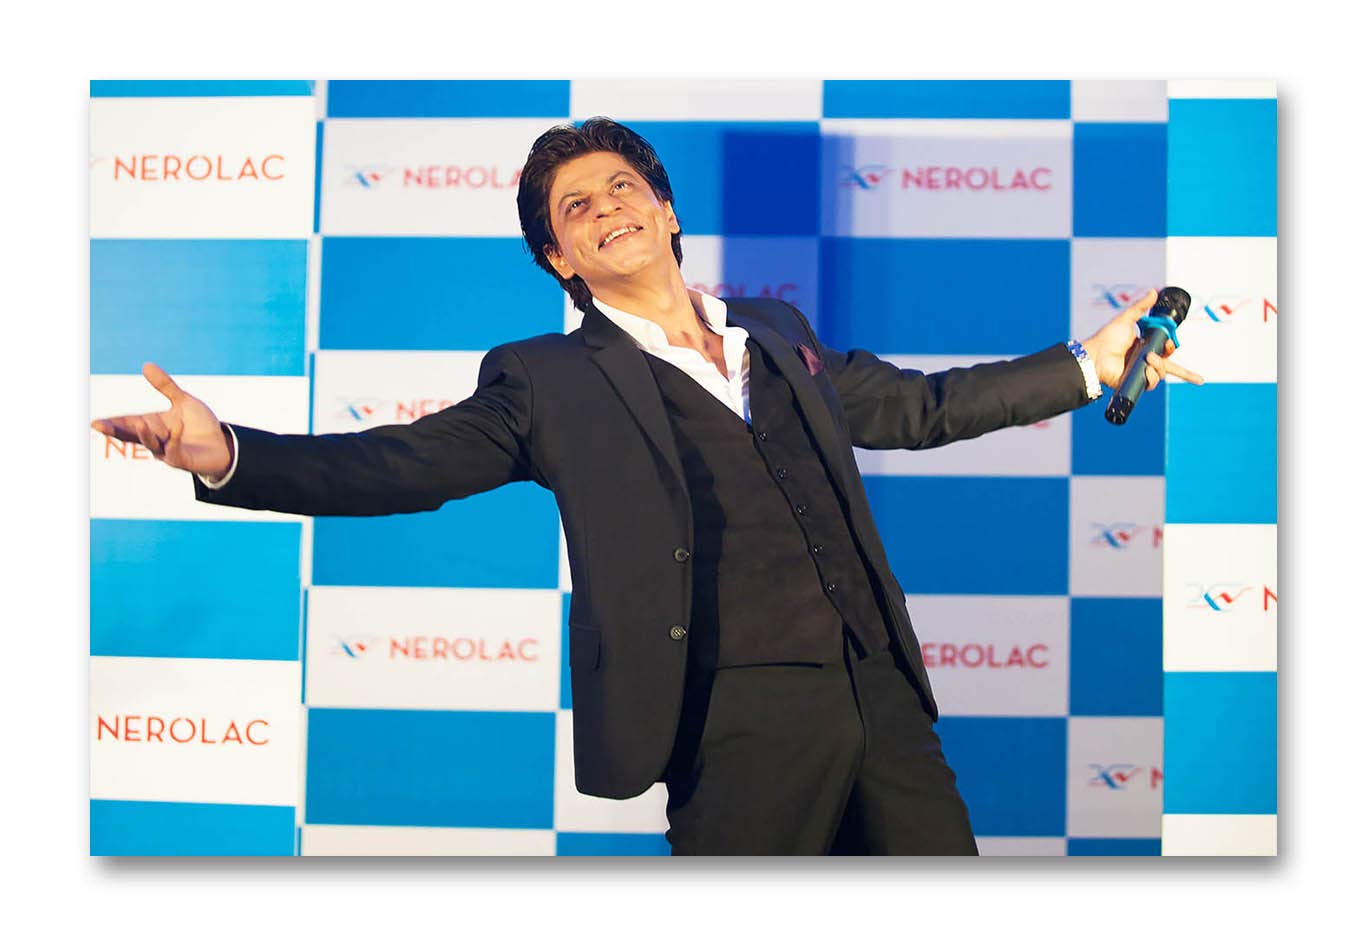 Pin by Sandi on SRK: SIGNATURE POSE | Shahrukh khan, Shah rukh khan movies,  Bollywood actors